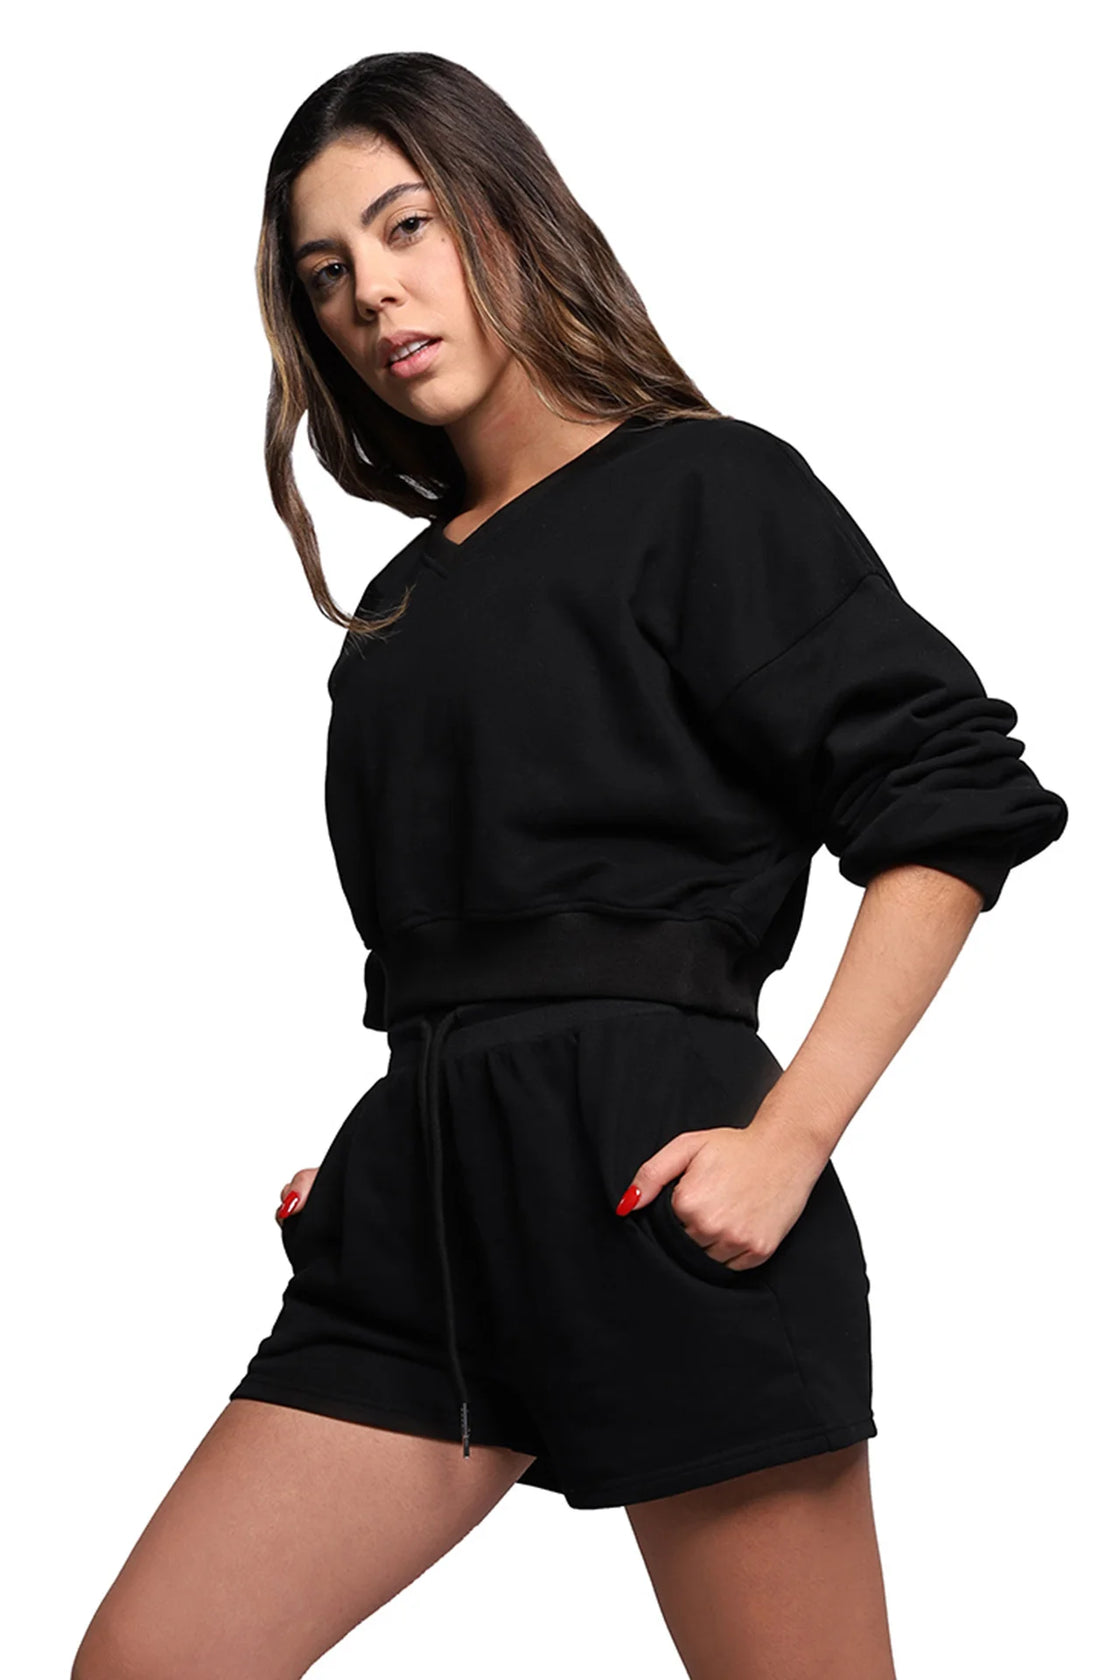 Oversize pullover in black color